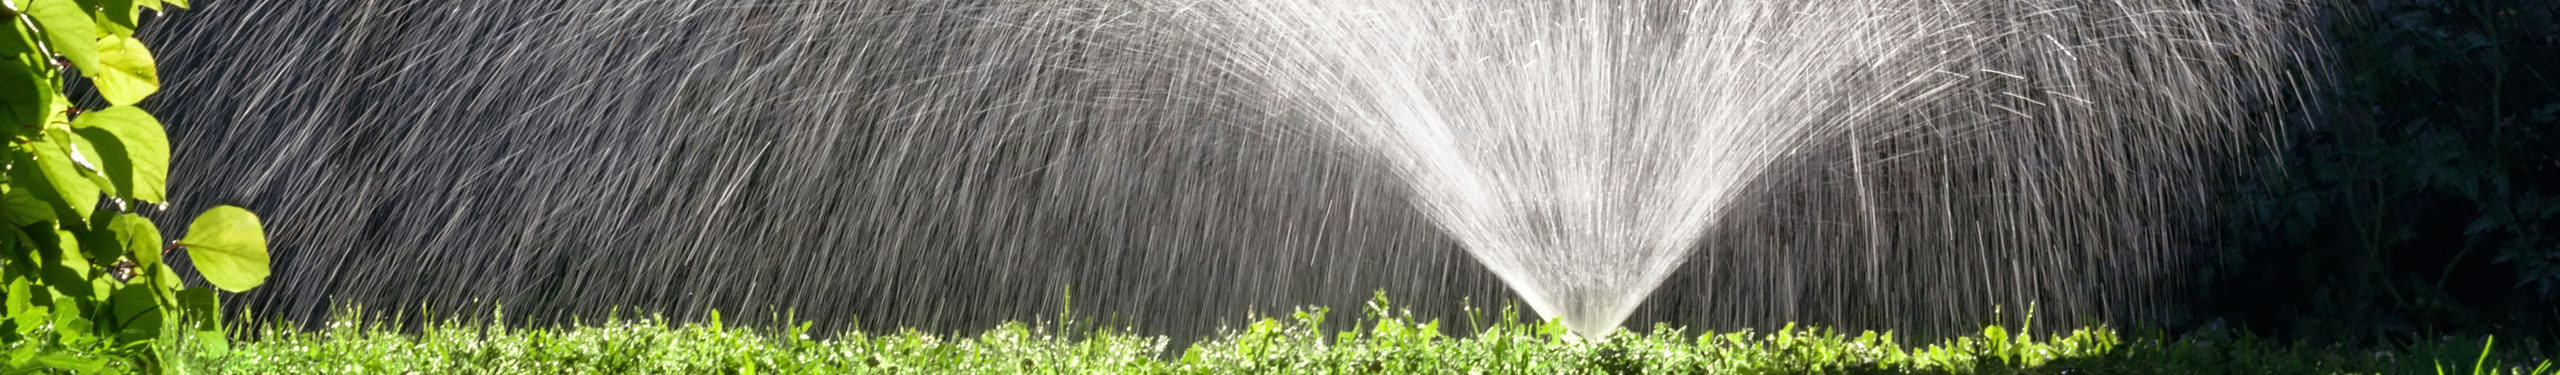 lawn sprinkler system watering grass